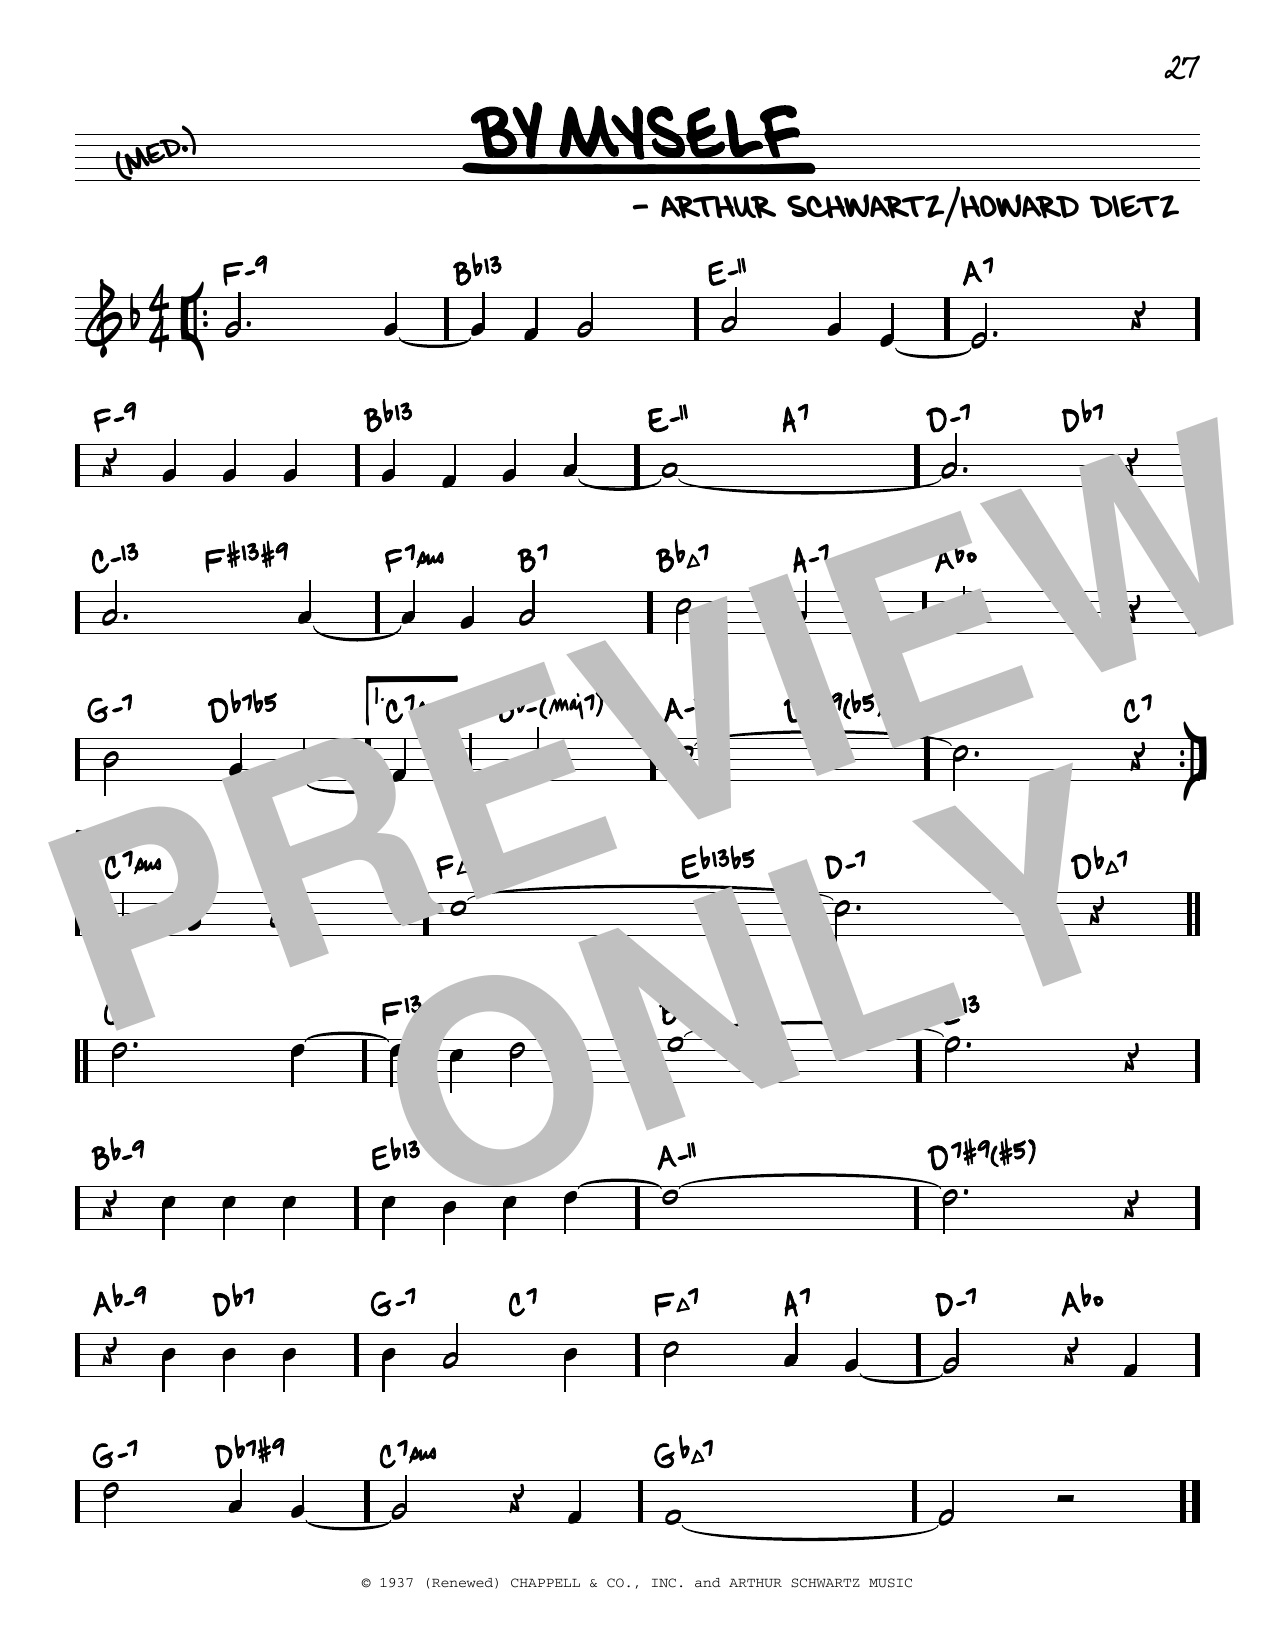 Arthur Schwartz By Myself (arr. David Hazeltine) Sheet Music Notes & Chords for Real Book – Enhanced Chords - Download or Print PDF